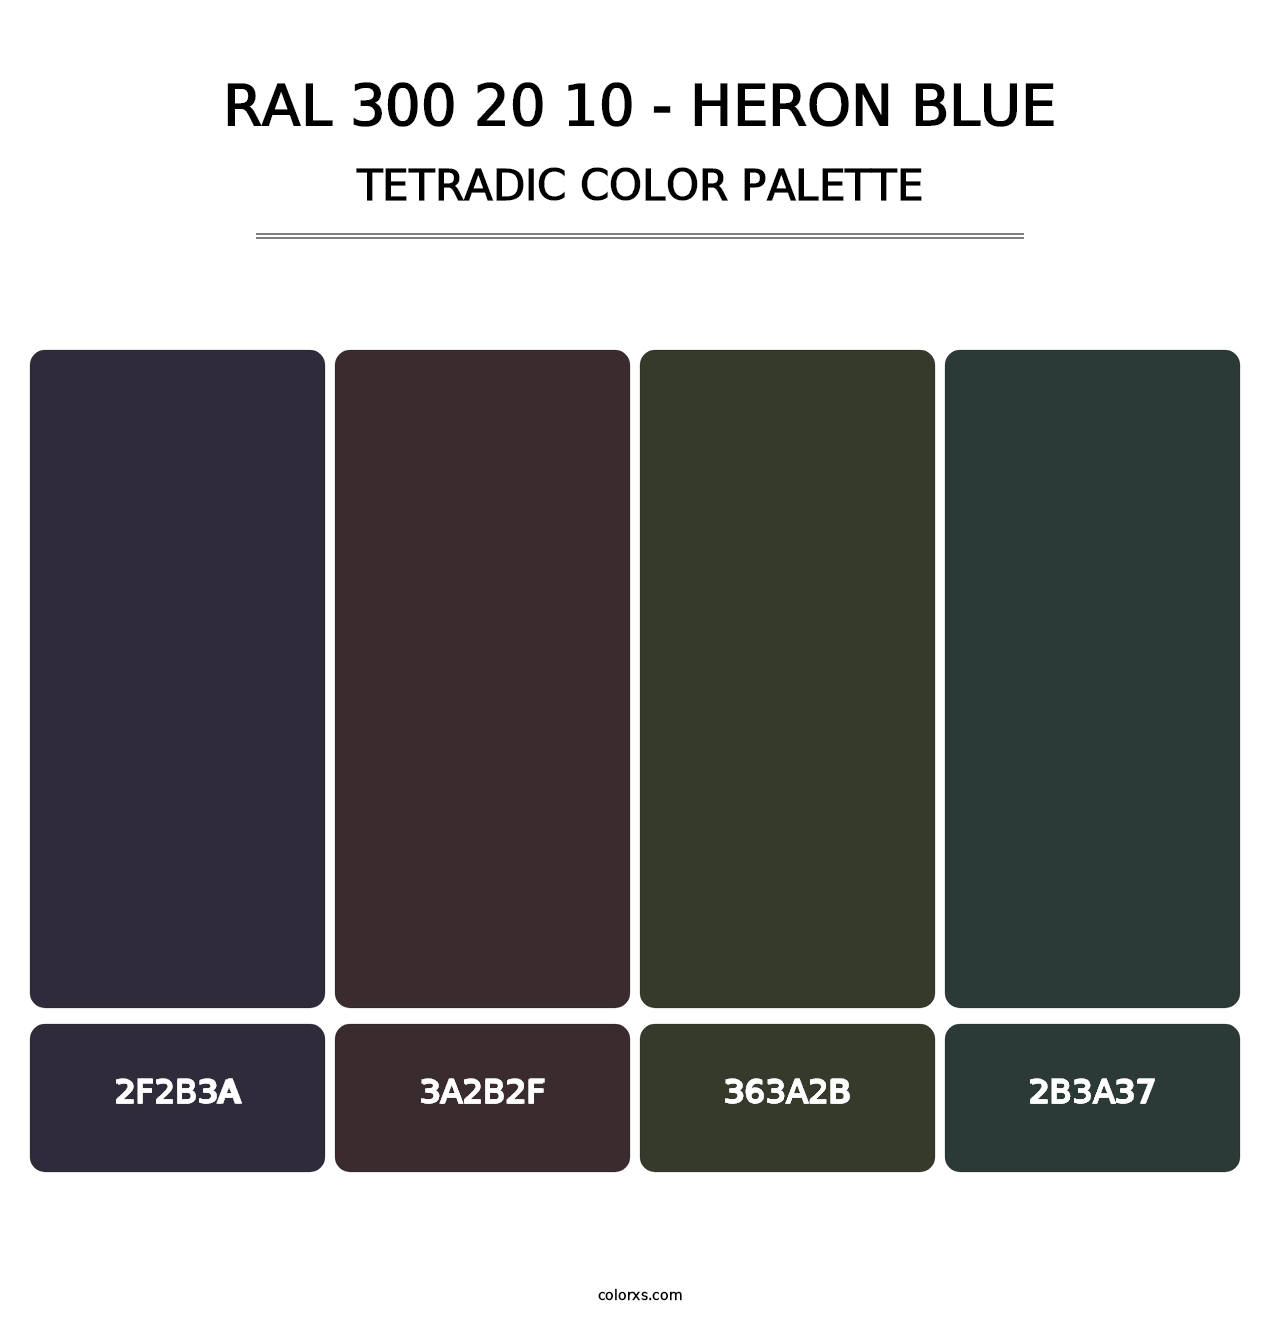 RAL 300 20 10 - Heron Blue - Tetradic Color Palette